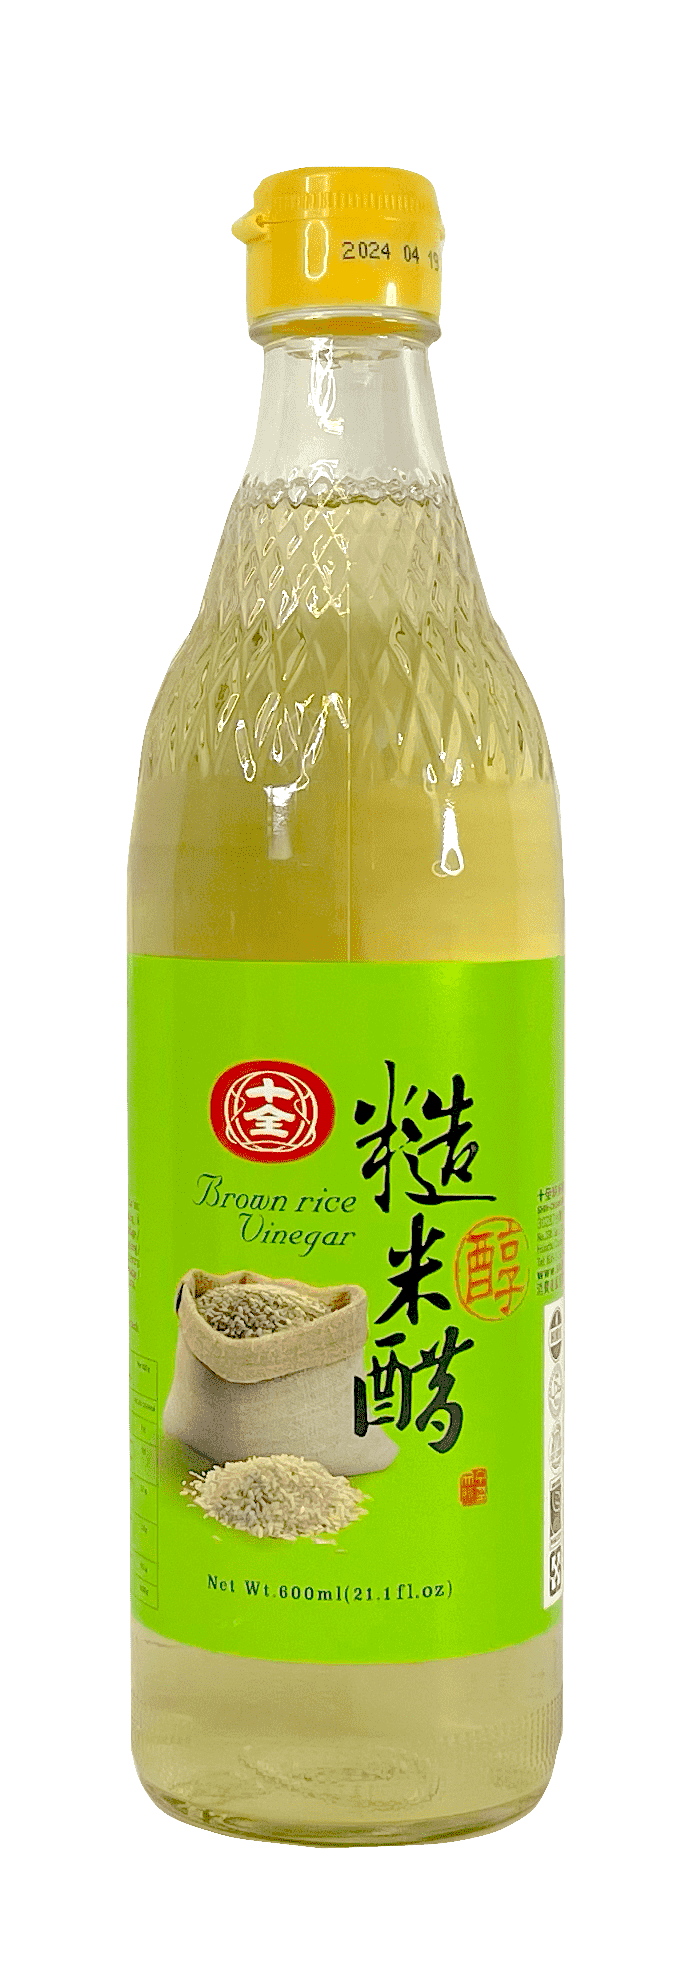 Brown Rice Vinegar 600ml Shih-Chuan Taiwan